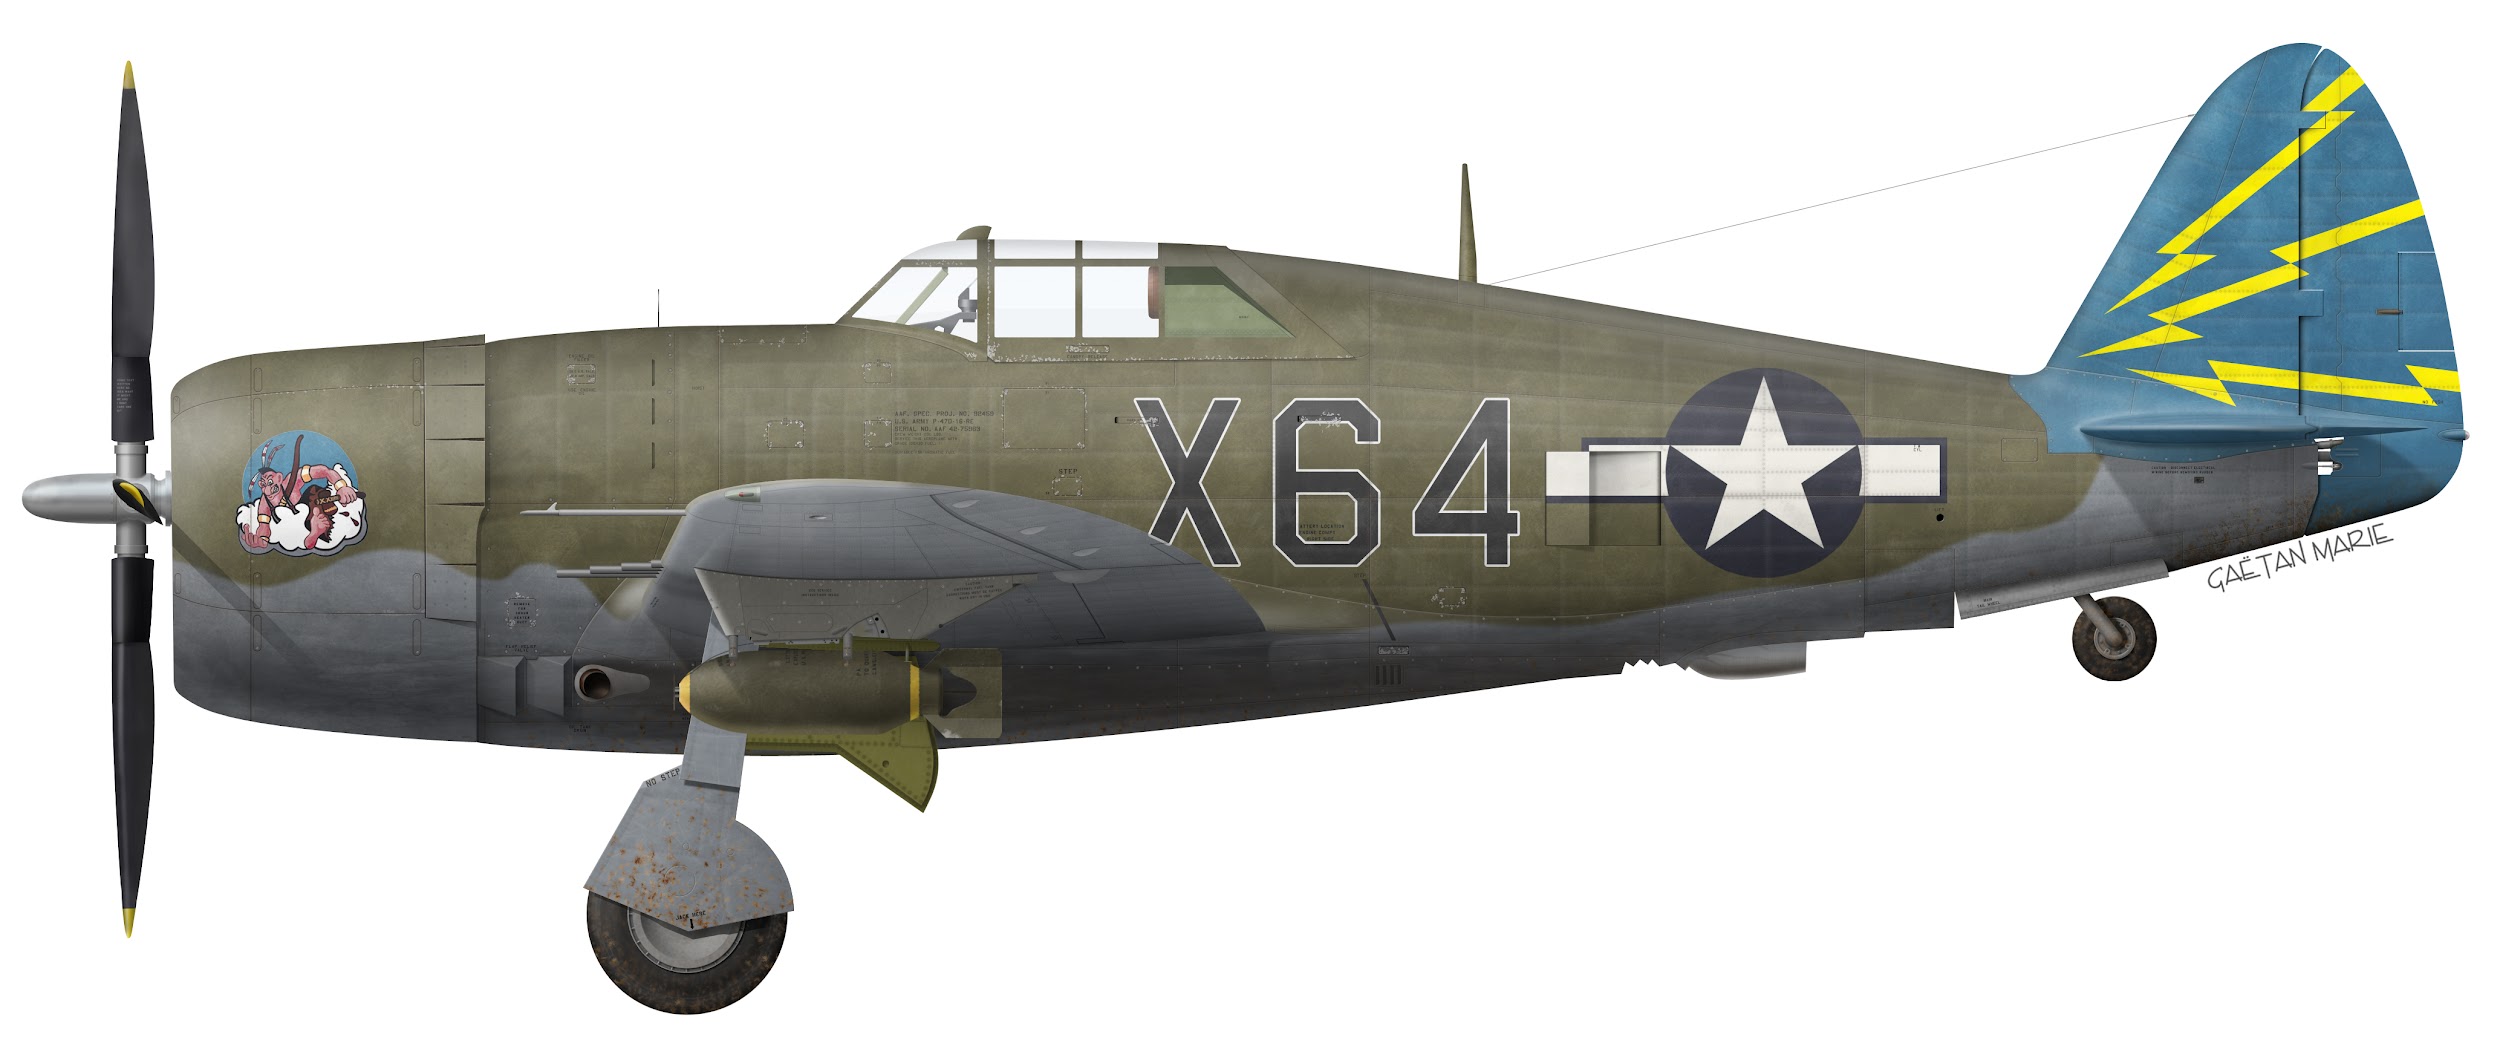 P-47: Restoration